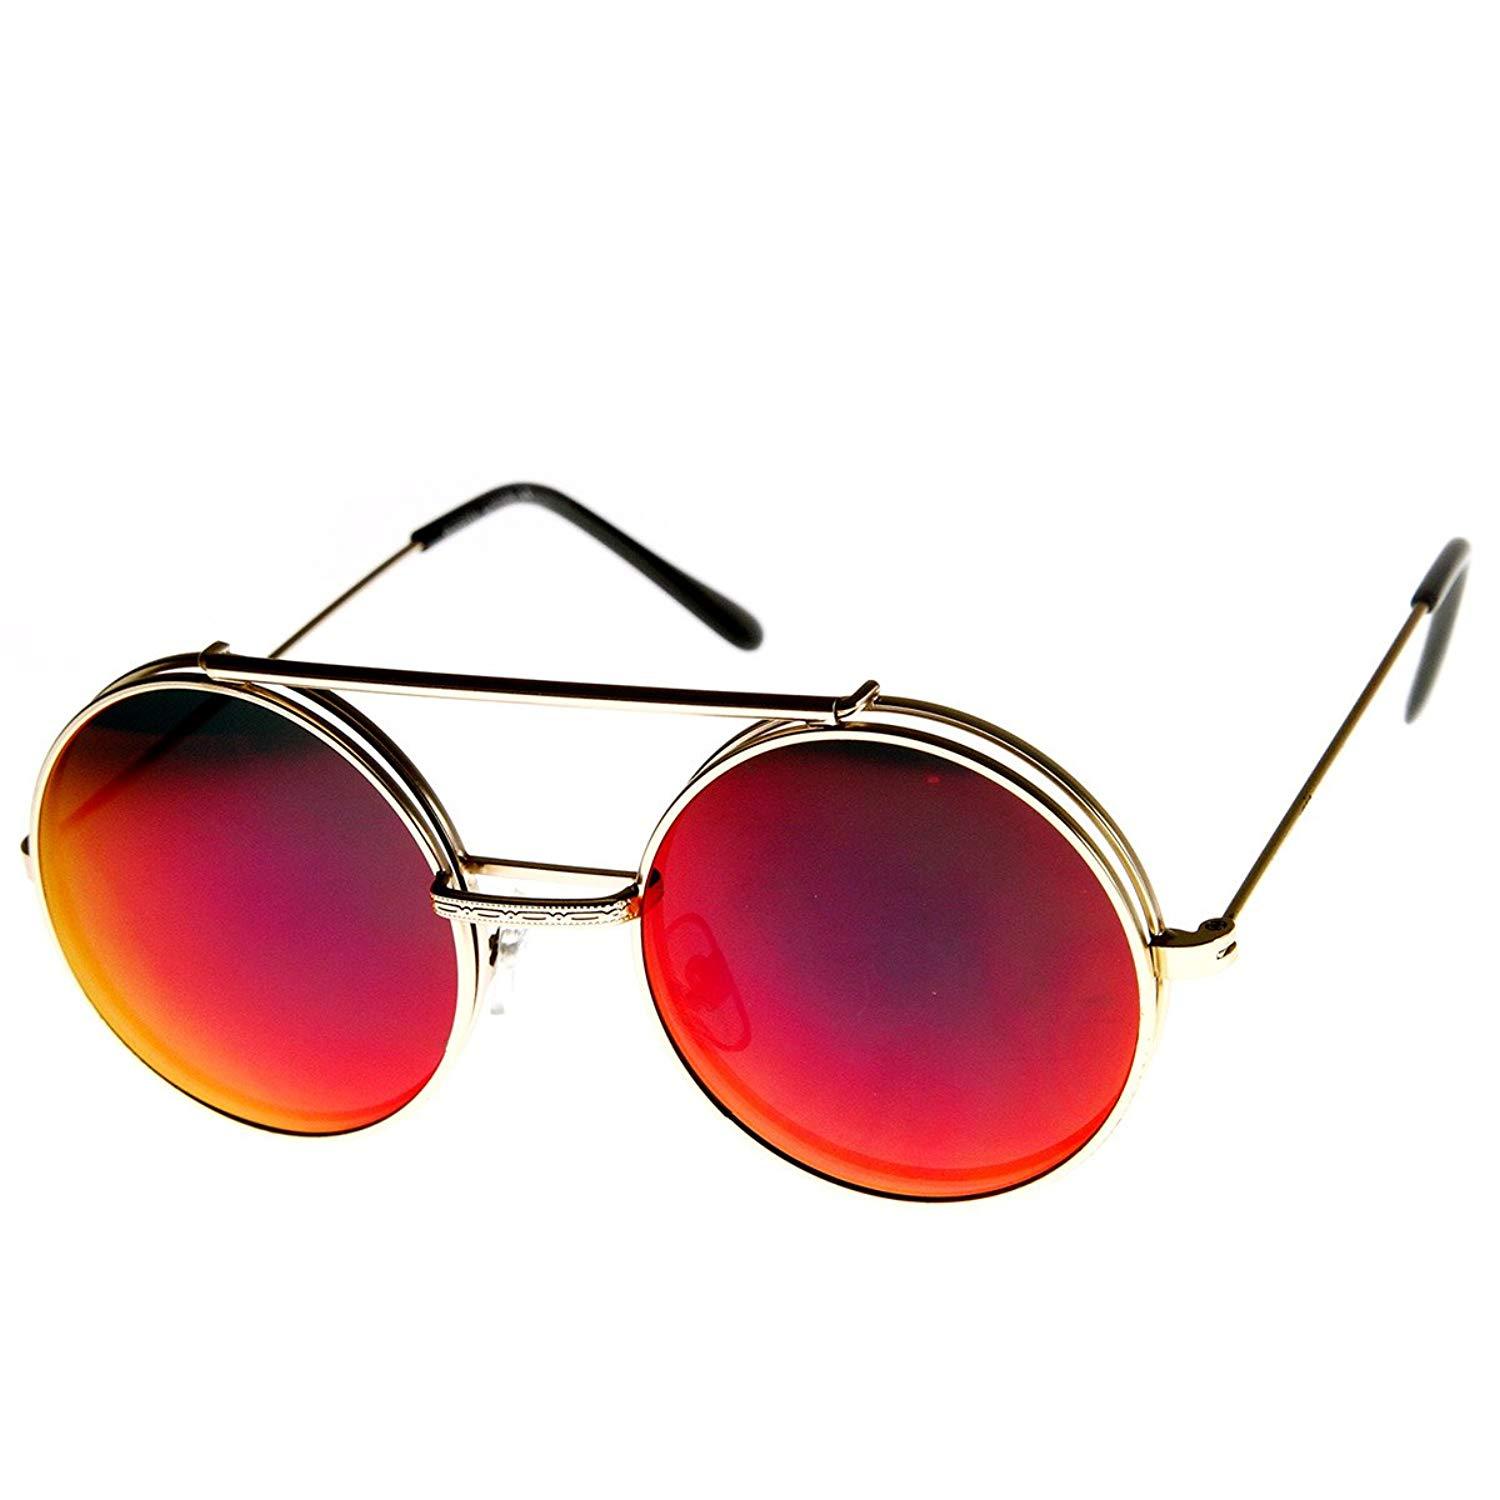 Limited Edition Red Mirror Flip Up Lens Round Circle Django Sunglasses Sunglasses And Fashion 